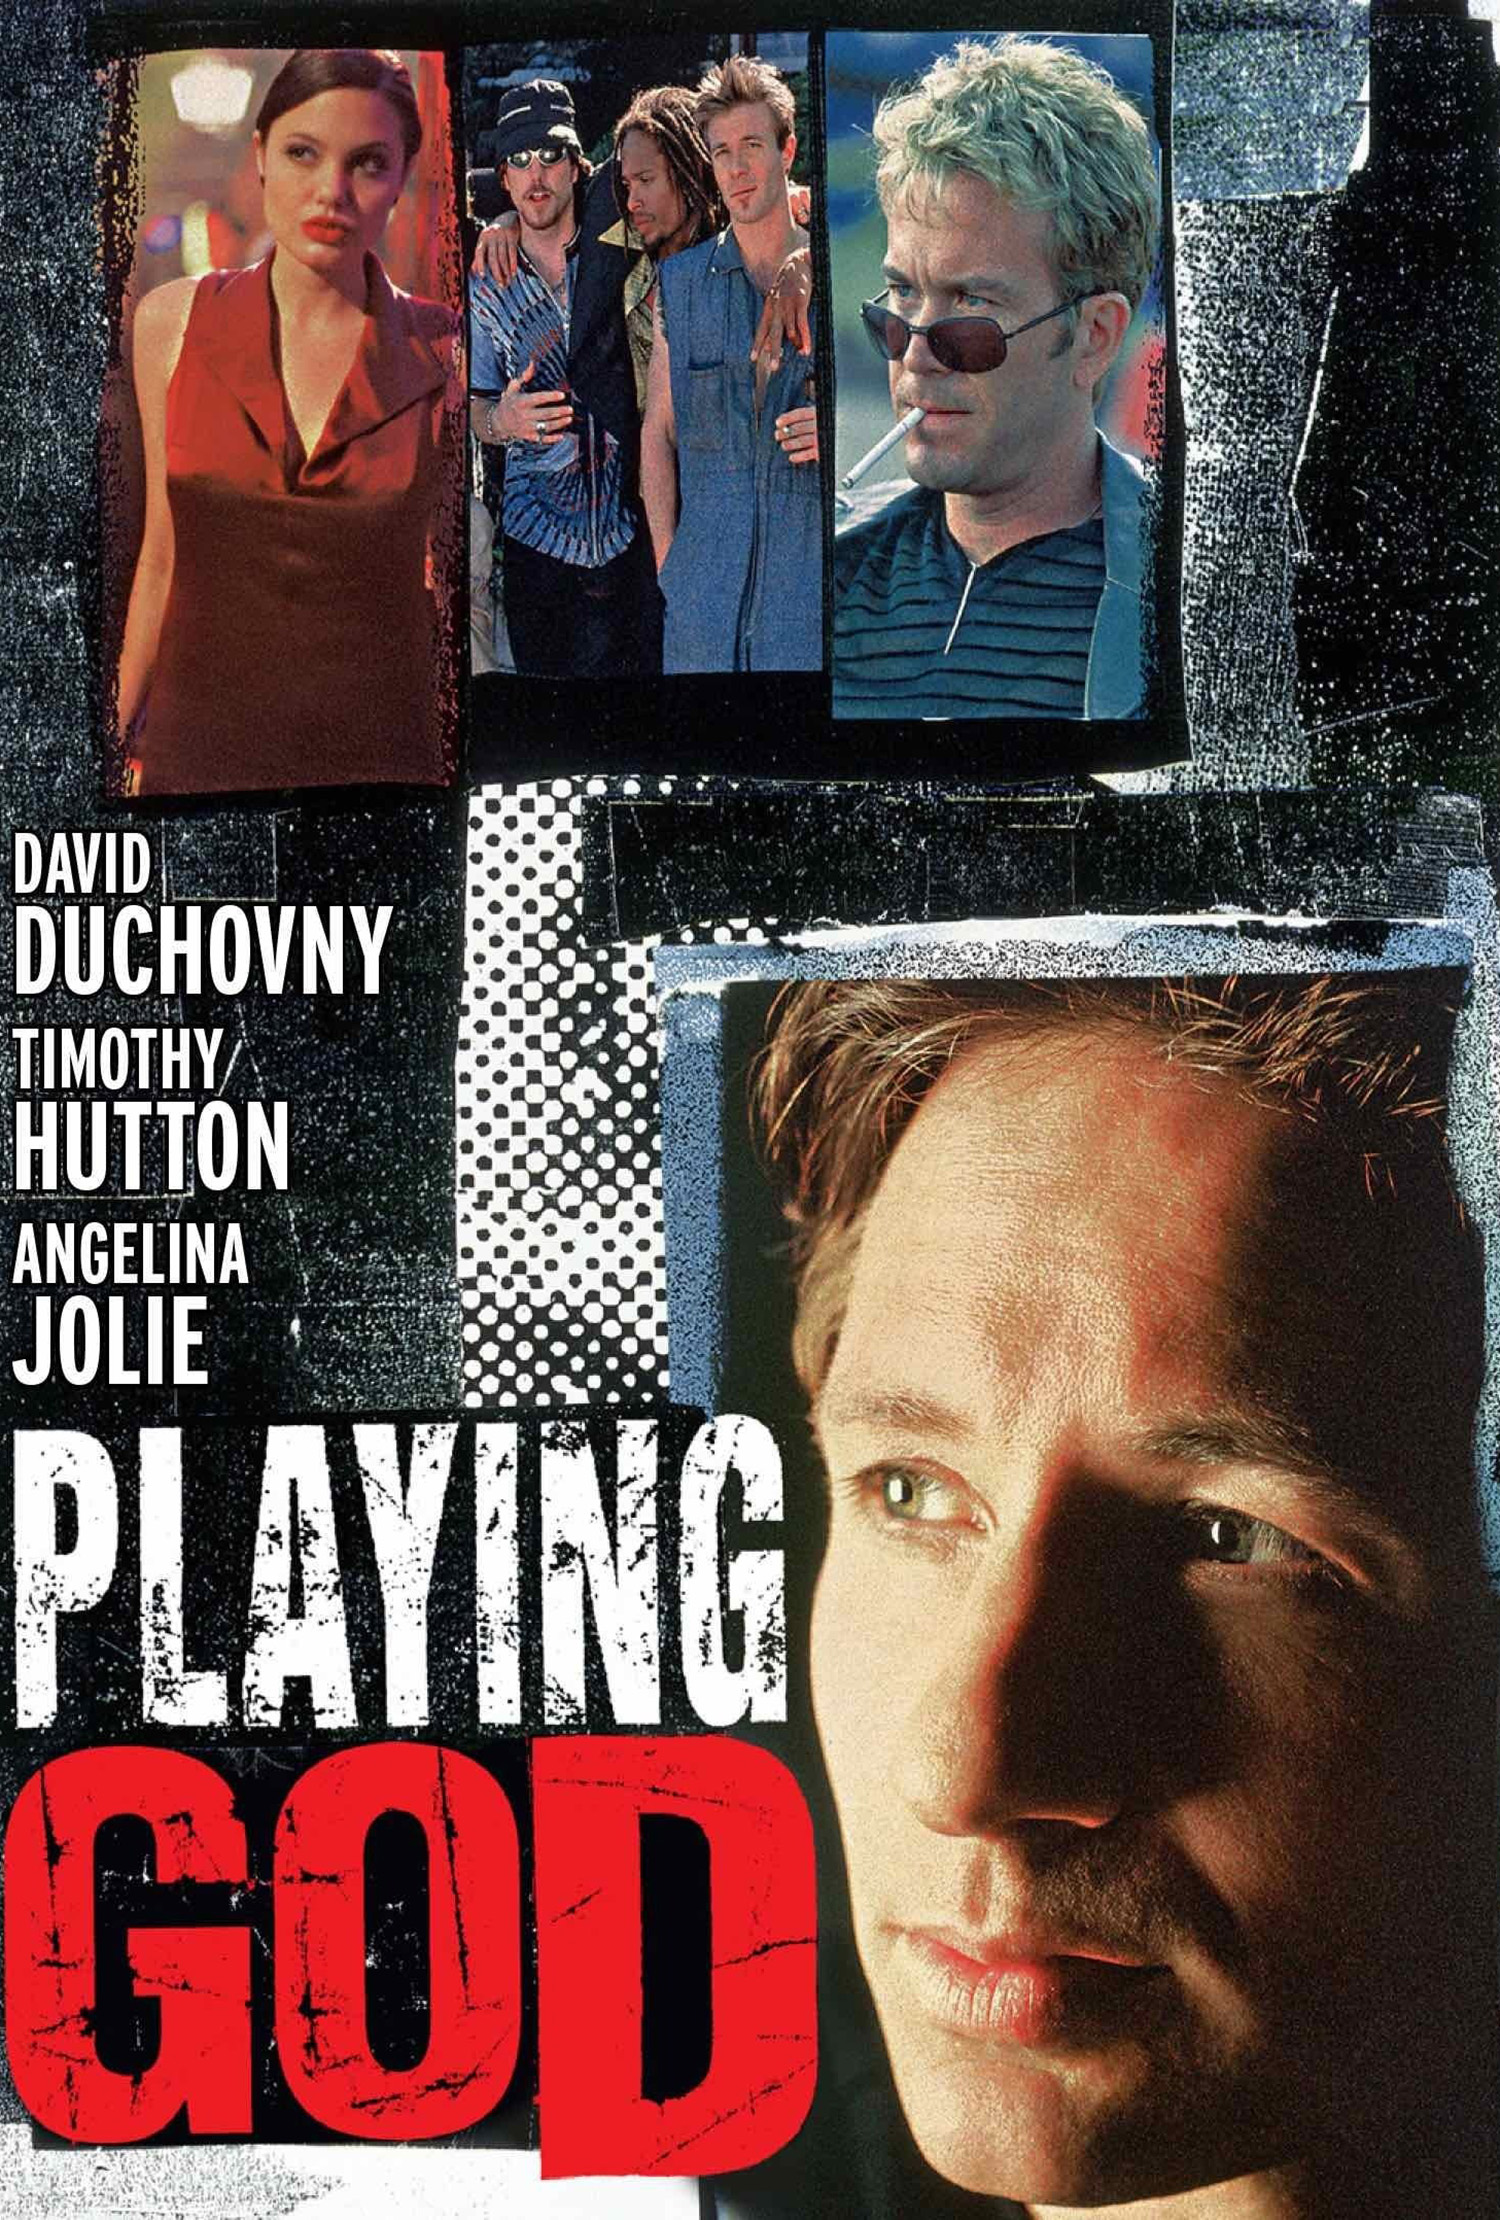 Playing God (1997) - Filmaffinity